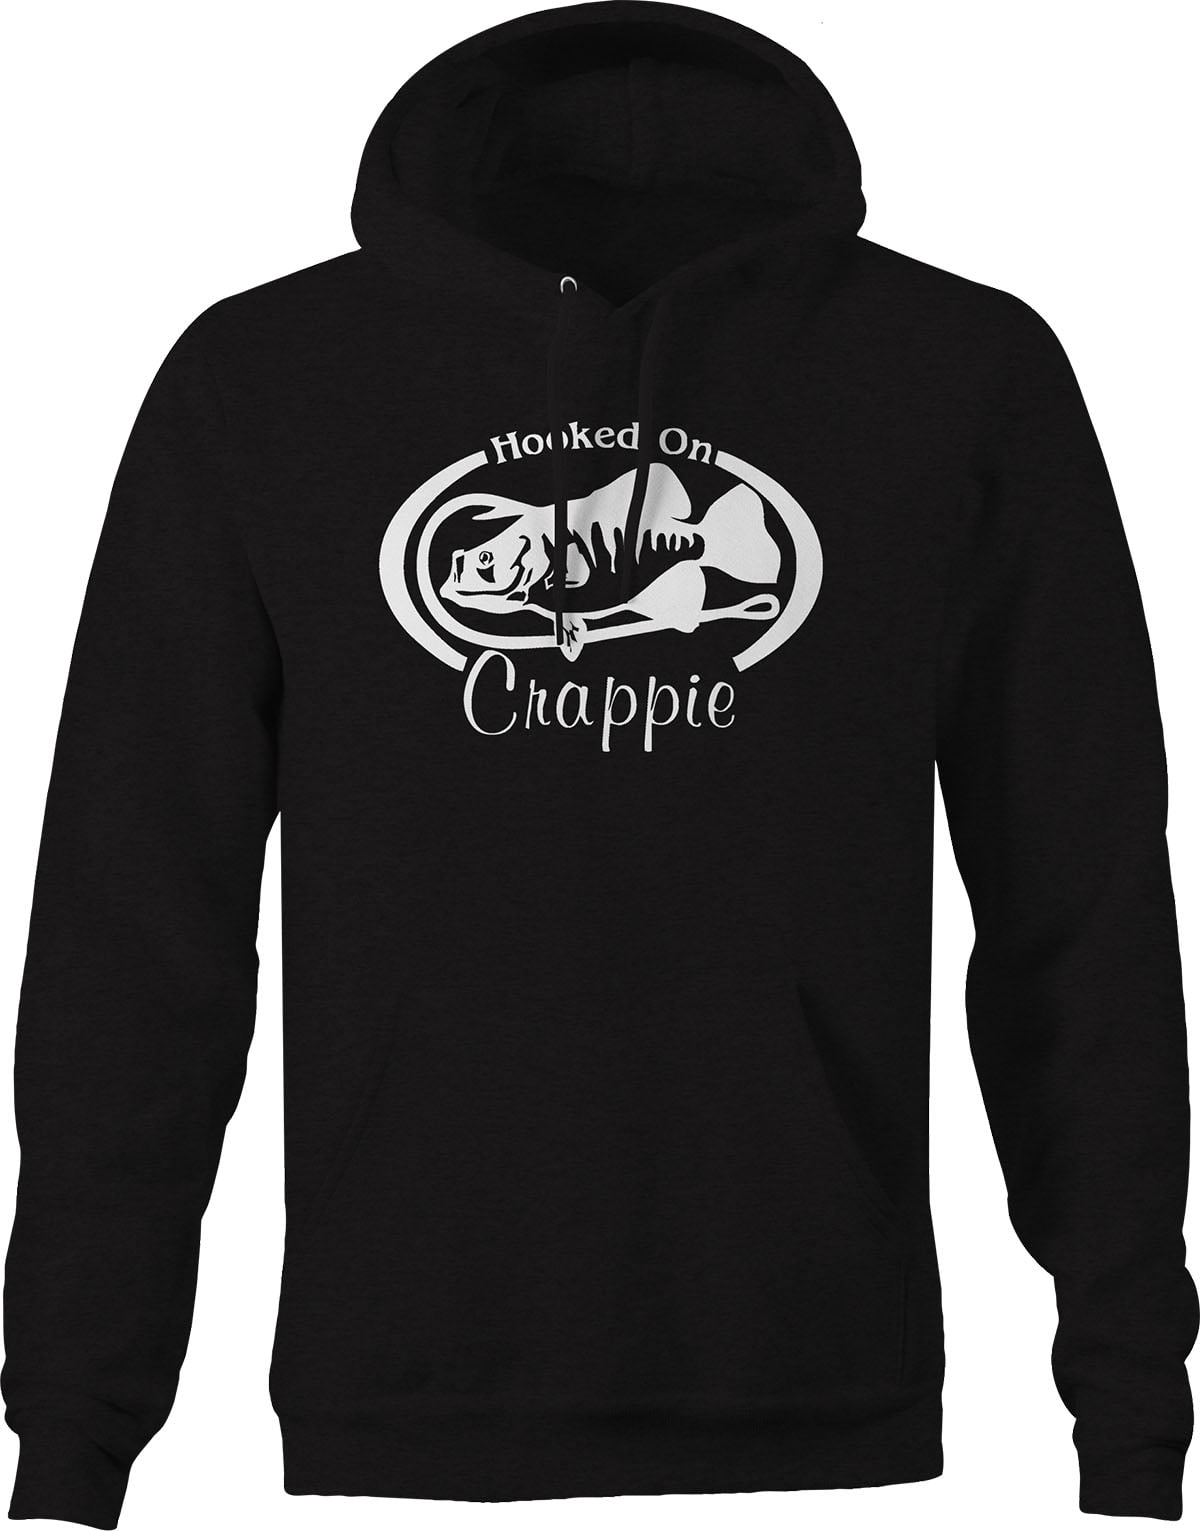 Hooked on Crappie Fishing Sweatshirt for Men Small Black 